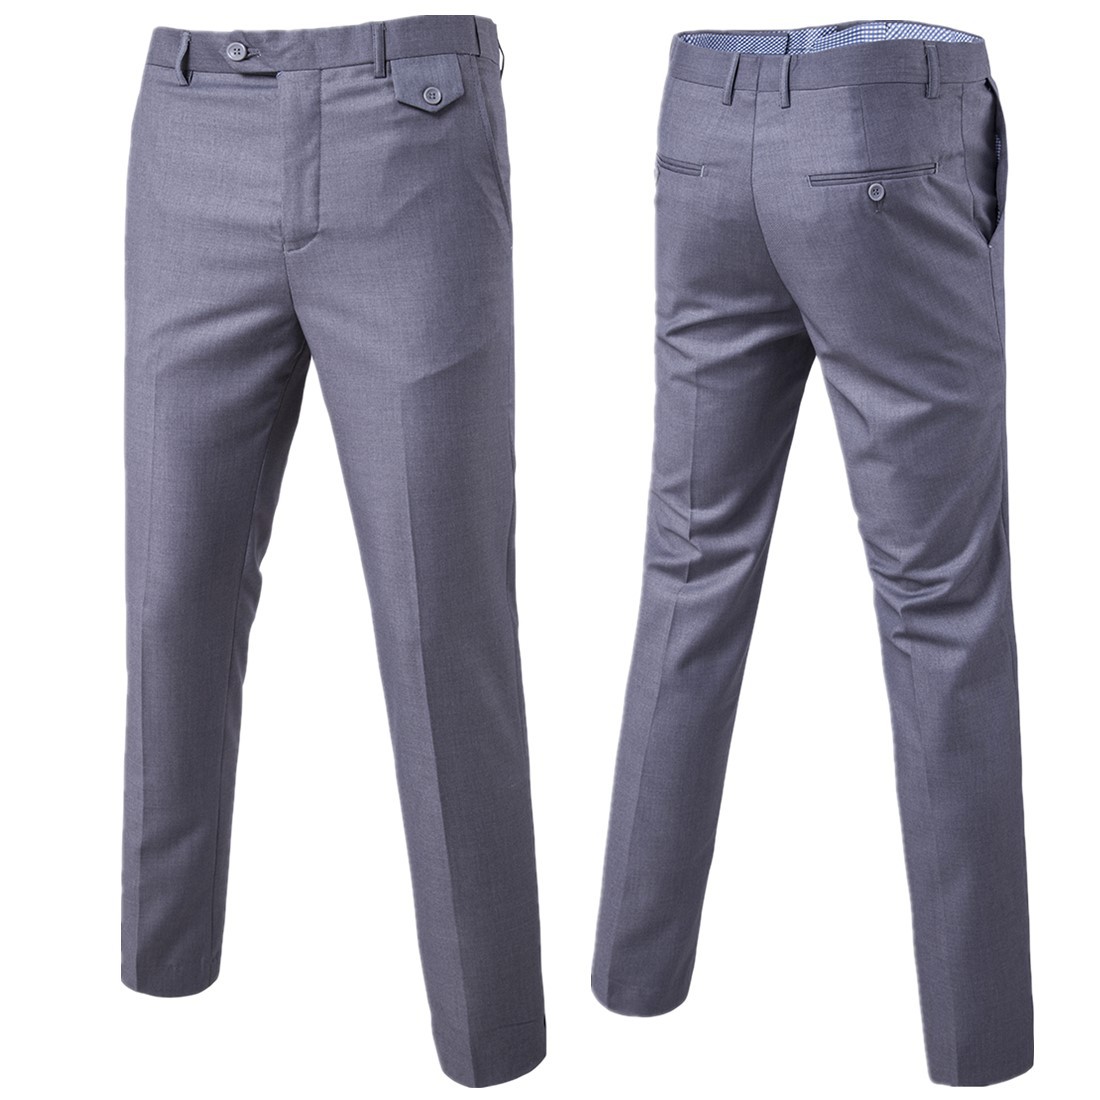 Men Suit Pants Cotton Solid Casual Business Formal Bridegroom Plus Size Wedding Trousers gray